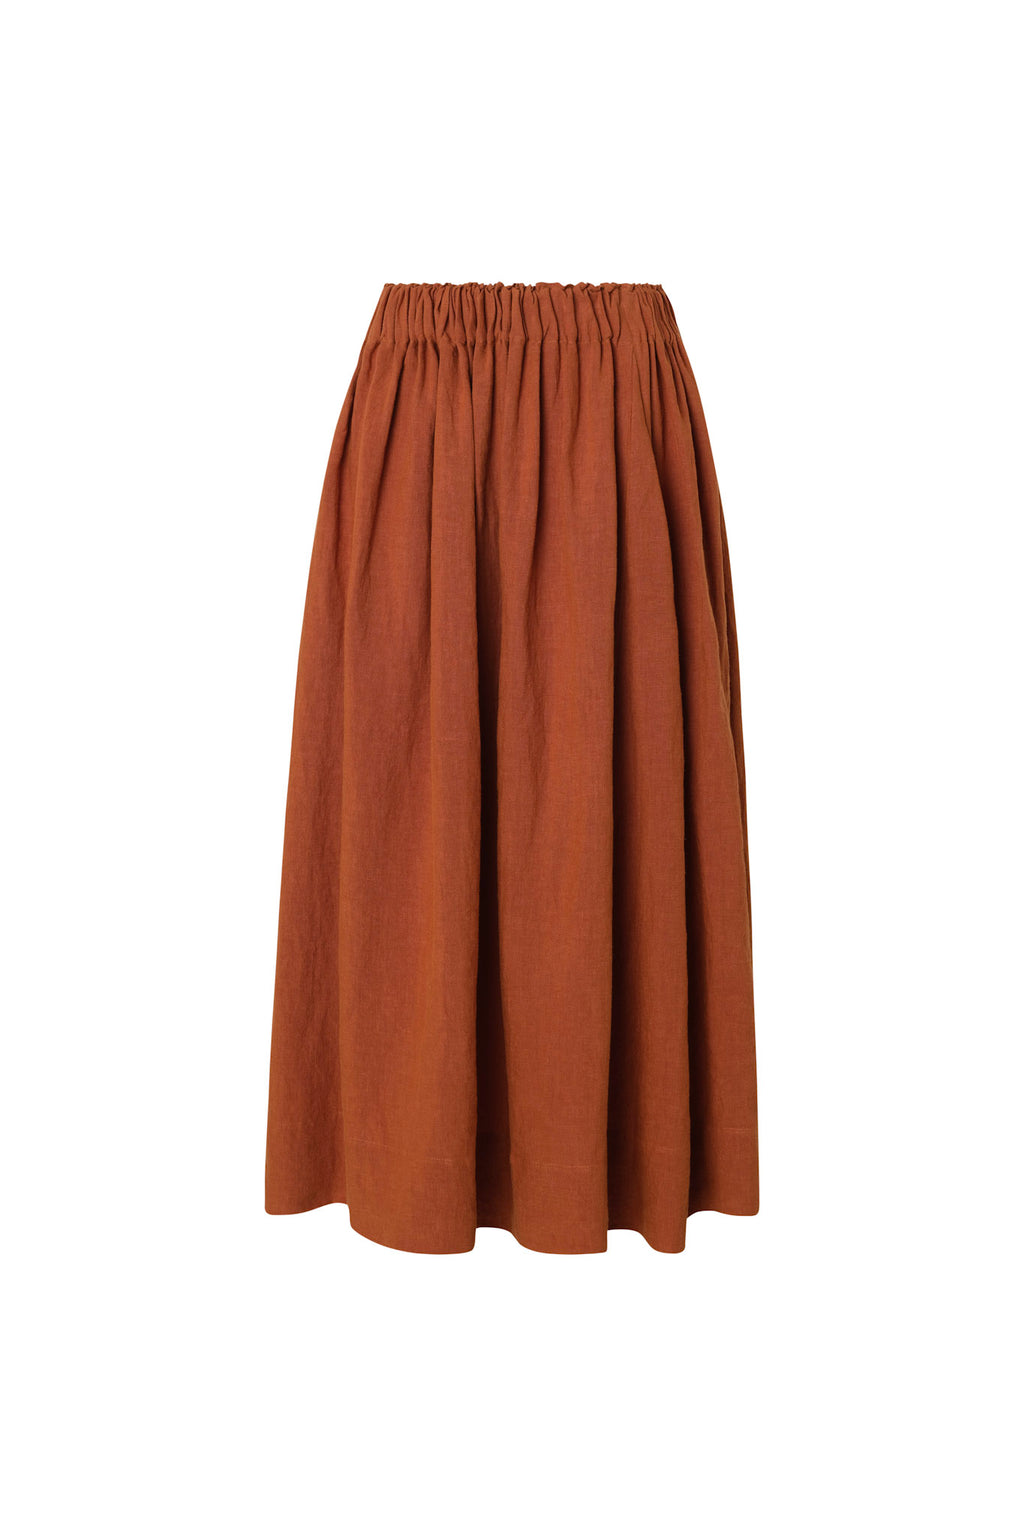 Leilani Skirt | Spice